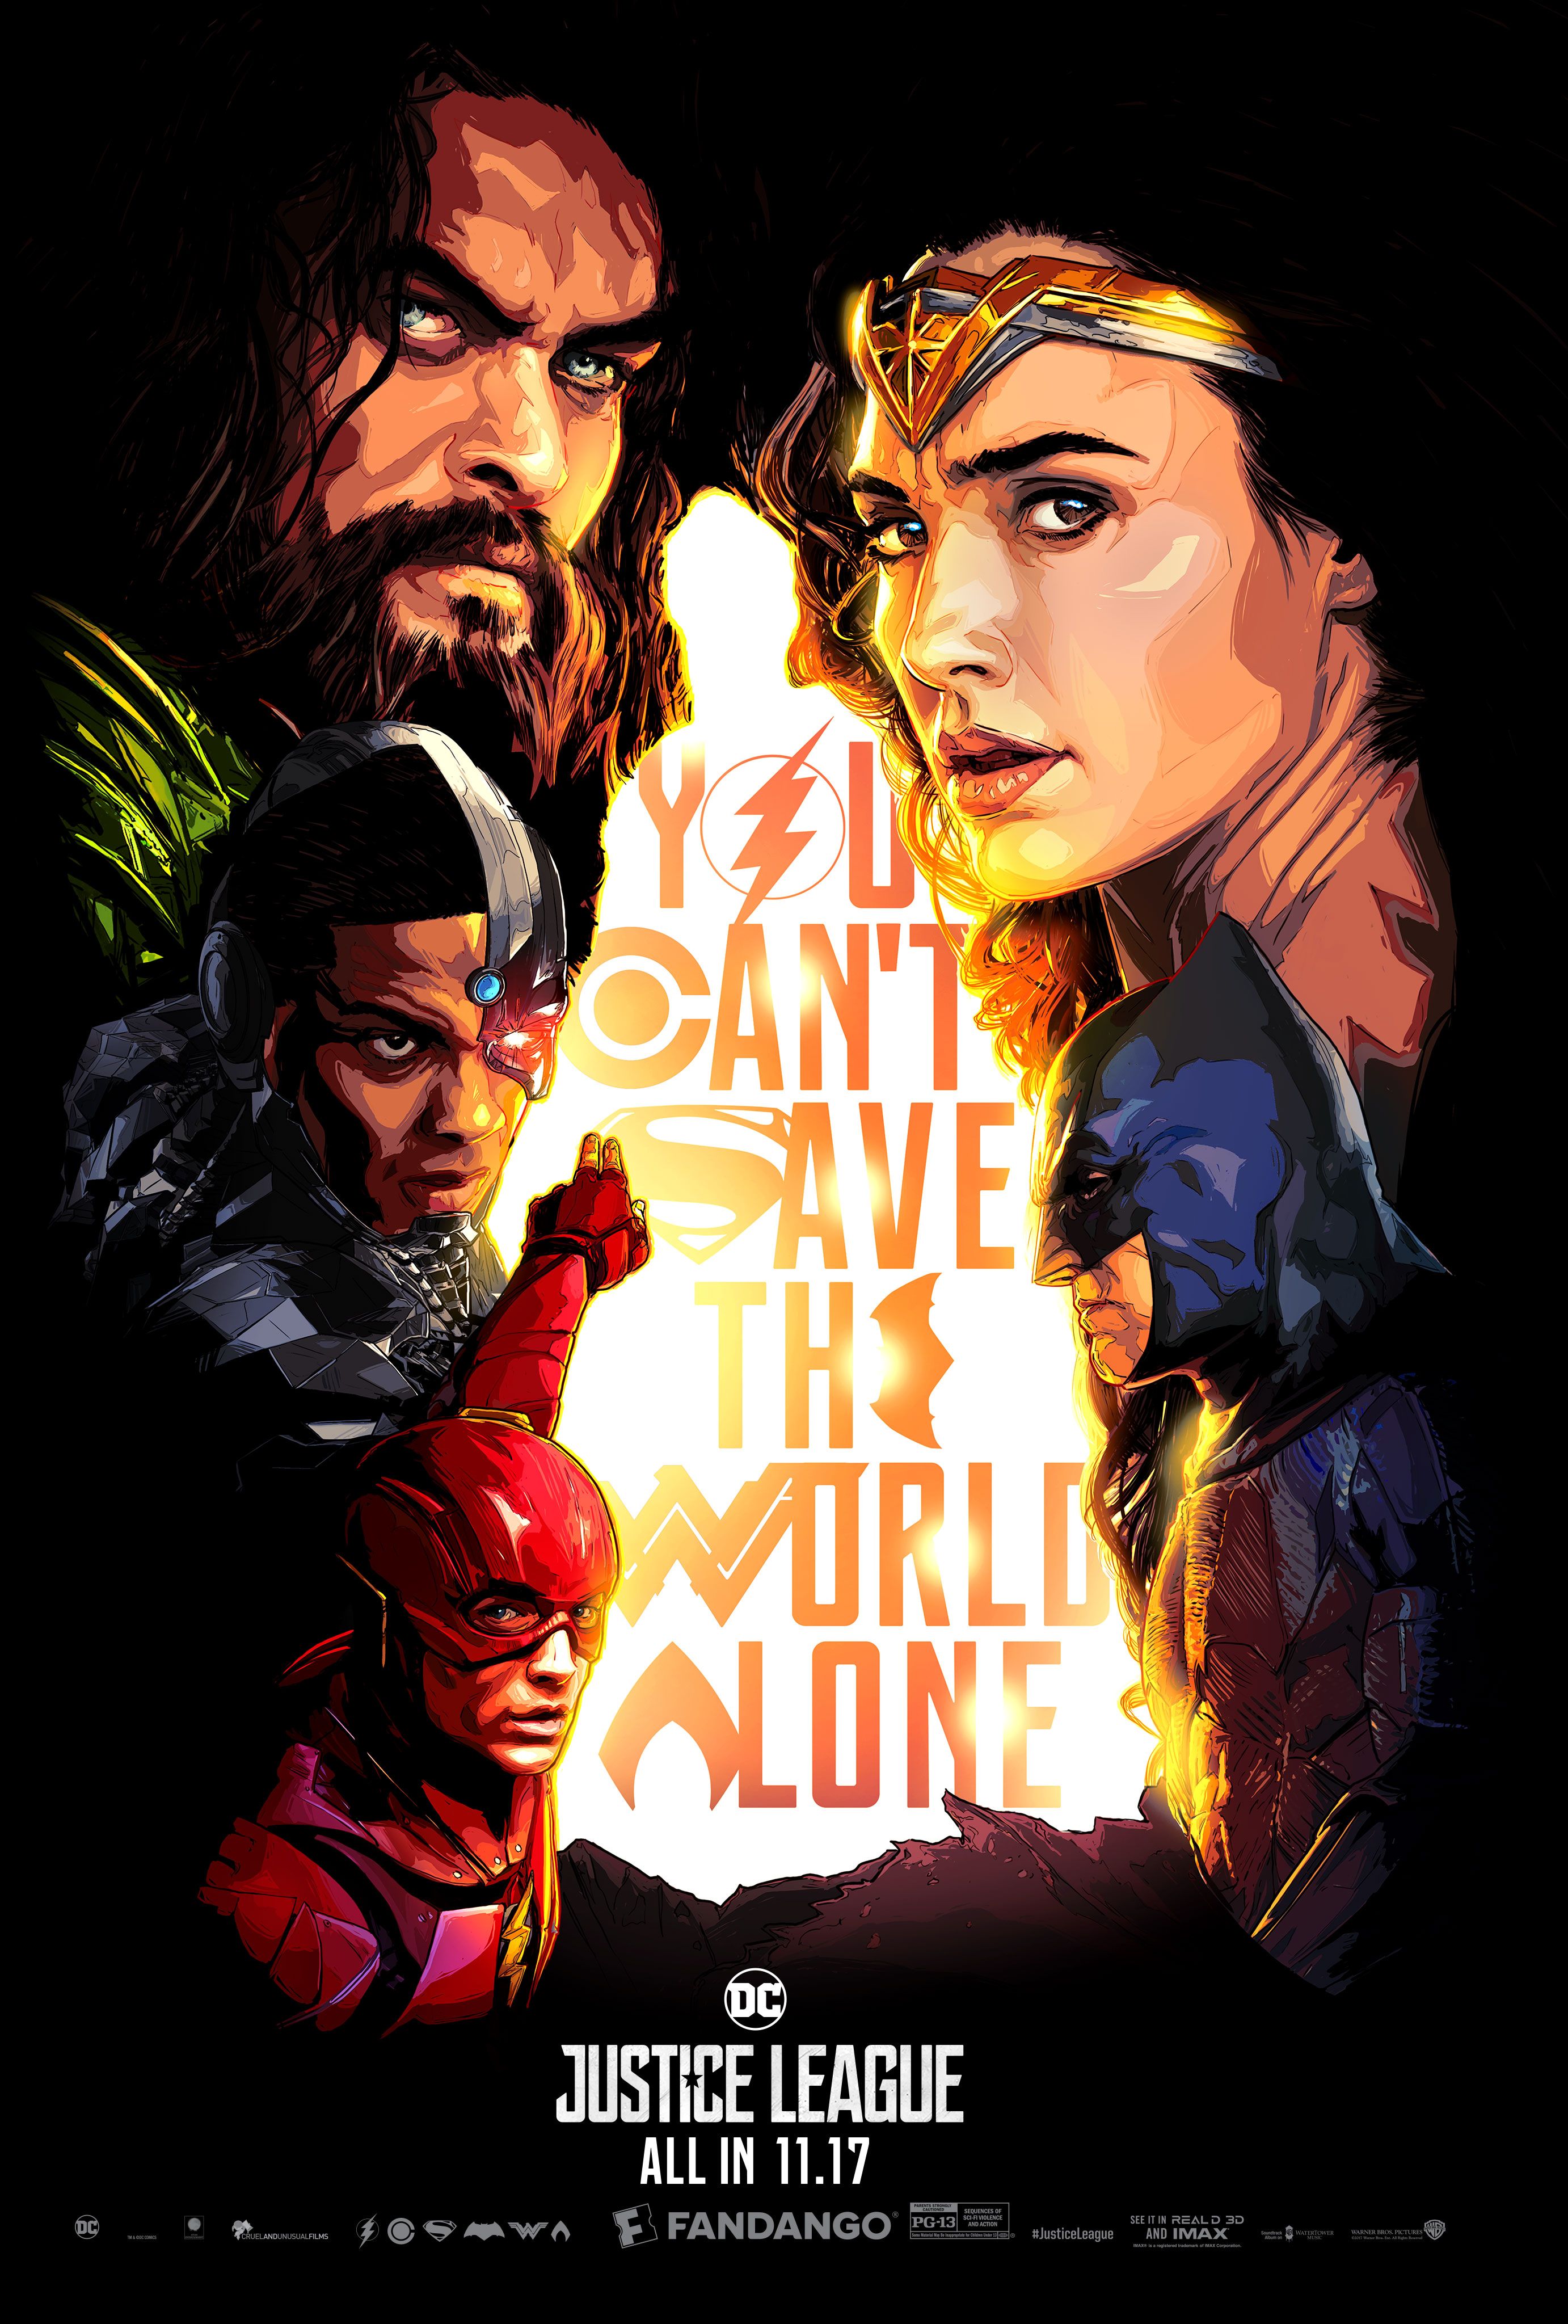 justice league war 2022 poster